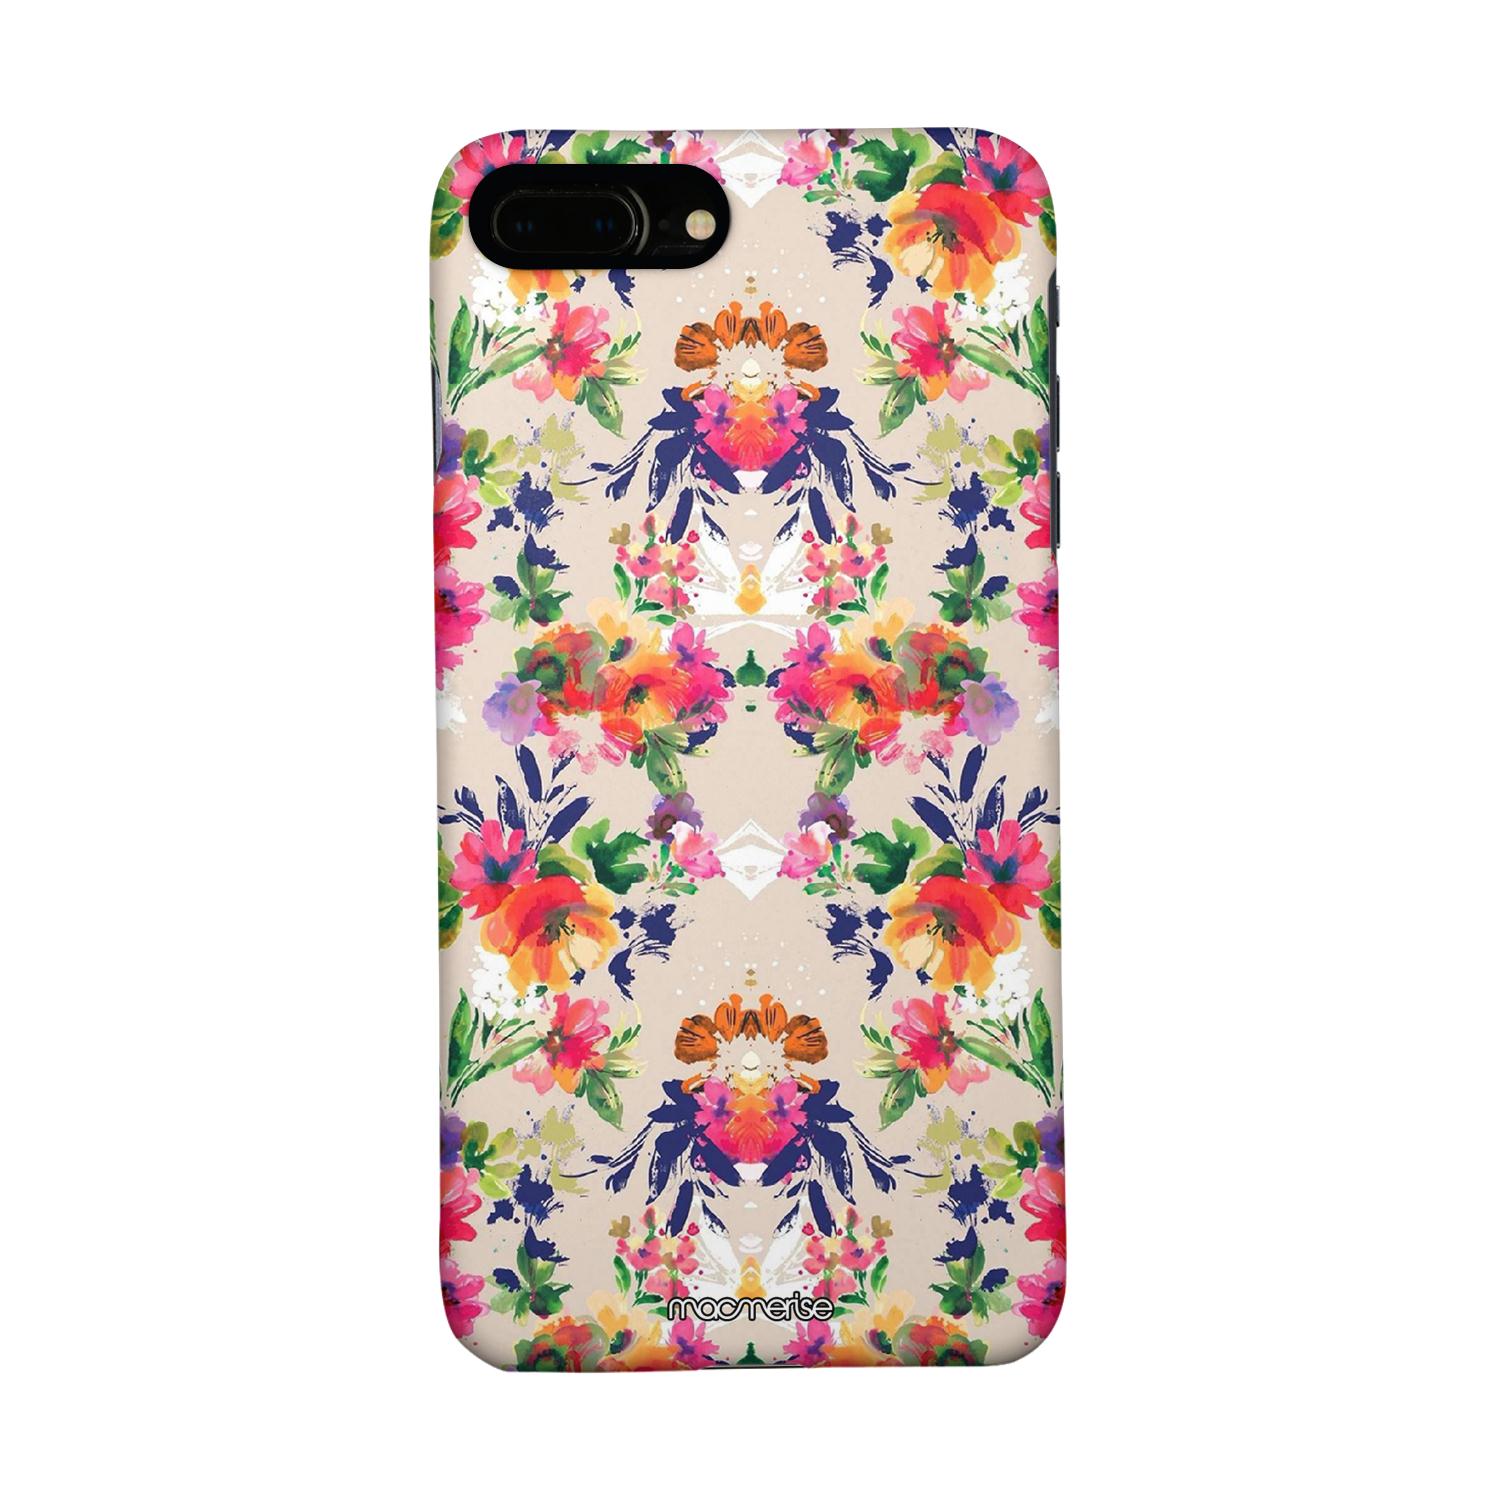 Buy Floral Symmetry - Sleek Phone Case for iPhone 7 Plus Online